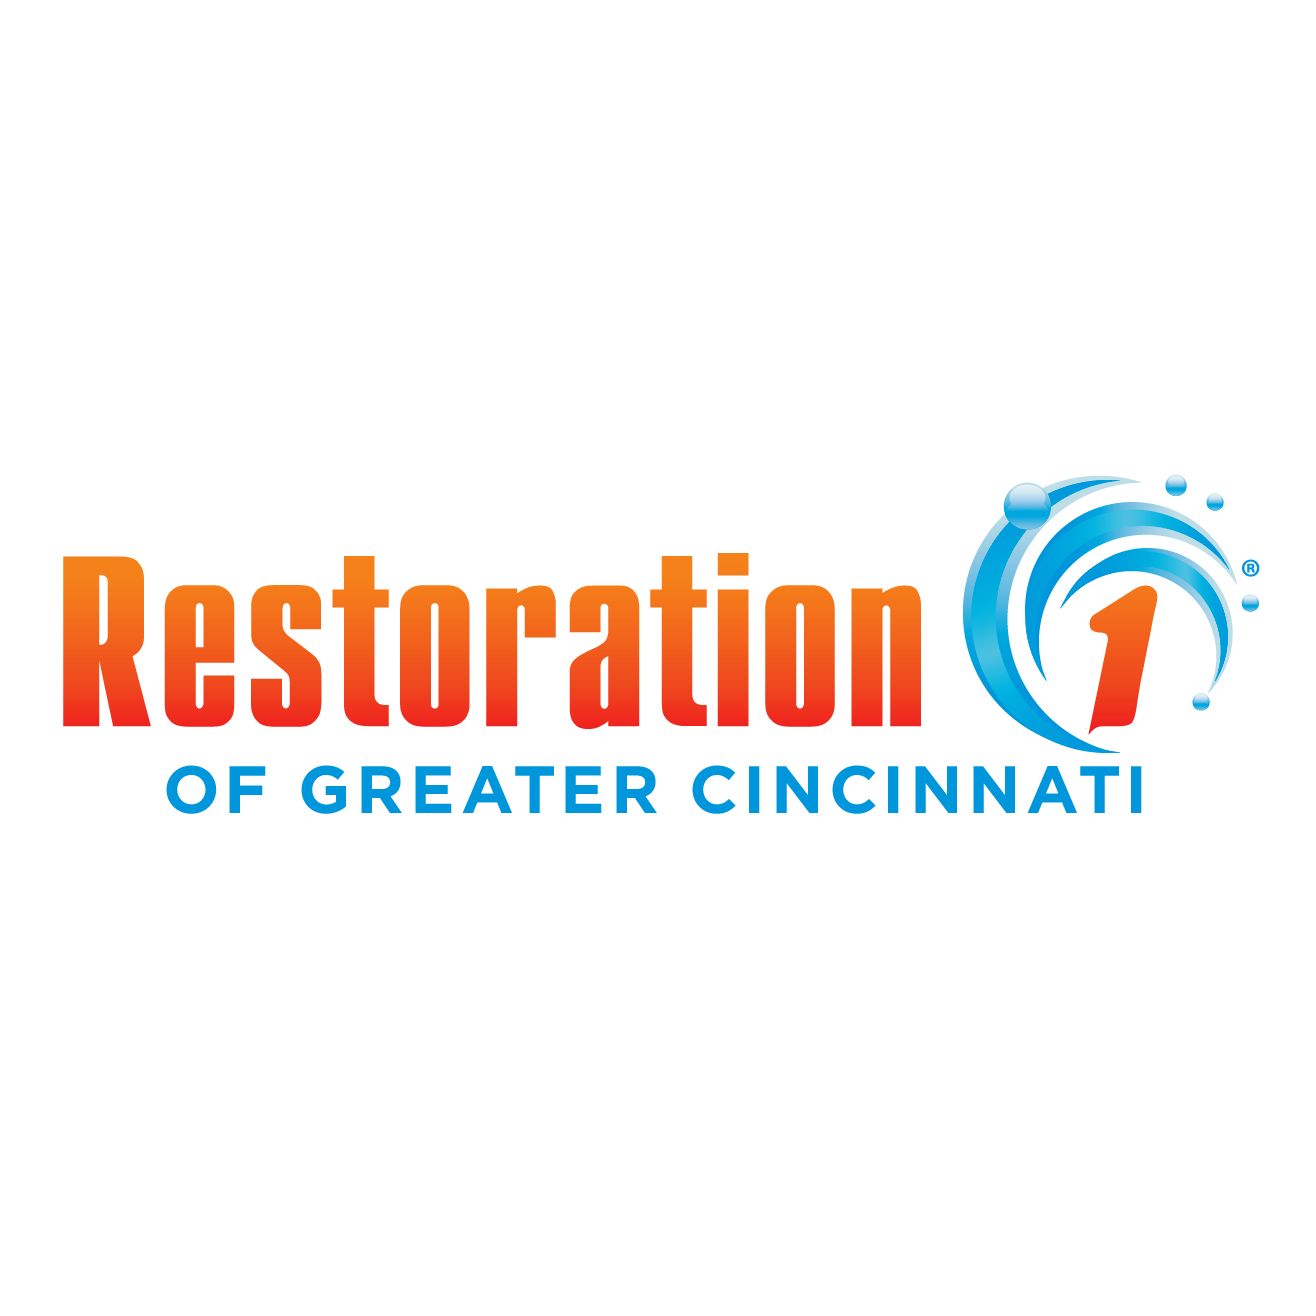 Restoration 1 of Greater Cincinnati - Newport, KY - (513)951-3208 | ShowMeLocal.com